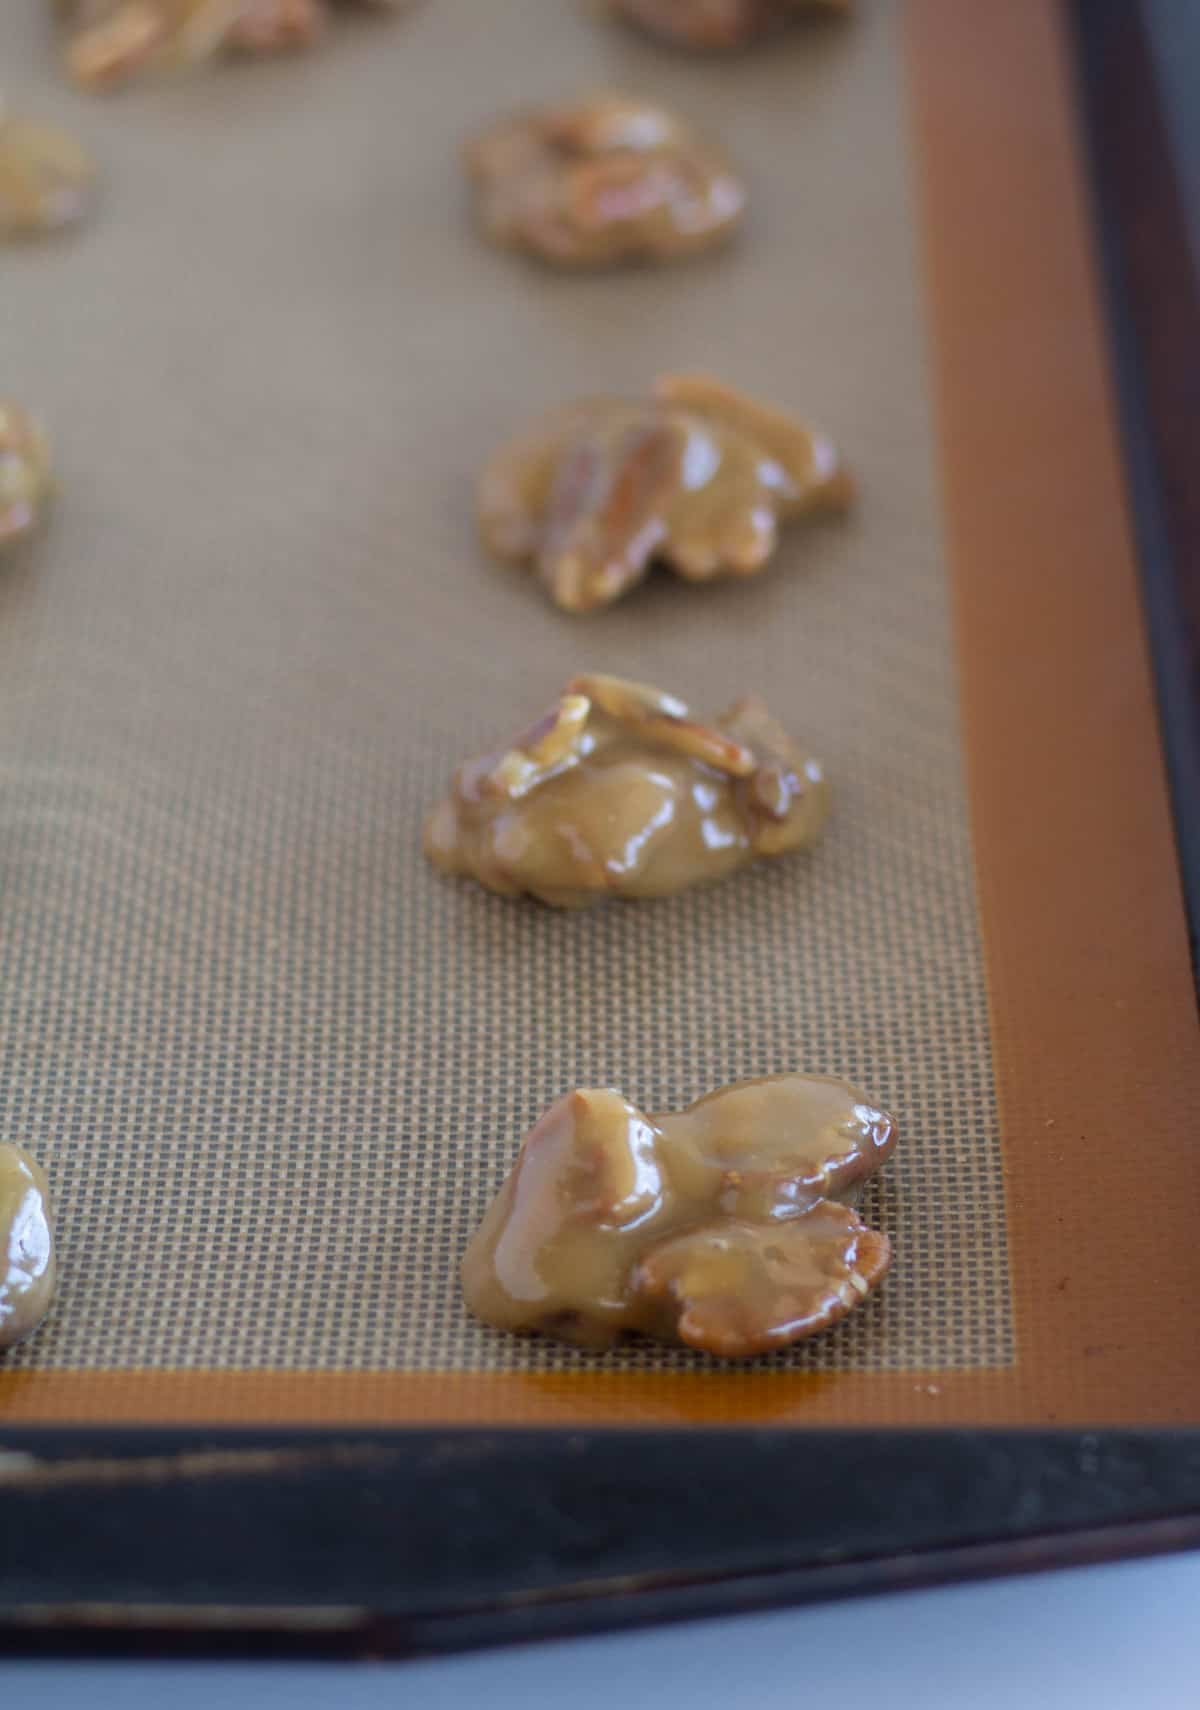 mounds of pecan/caramel mixture on lined baking sheet.